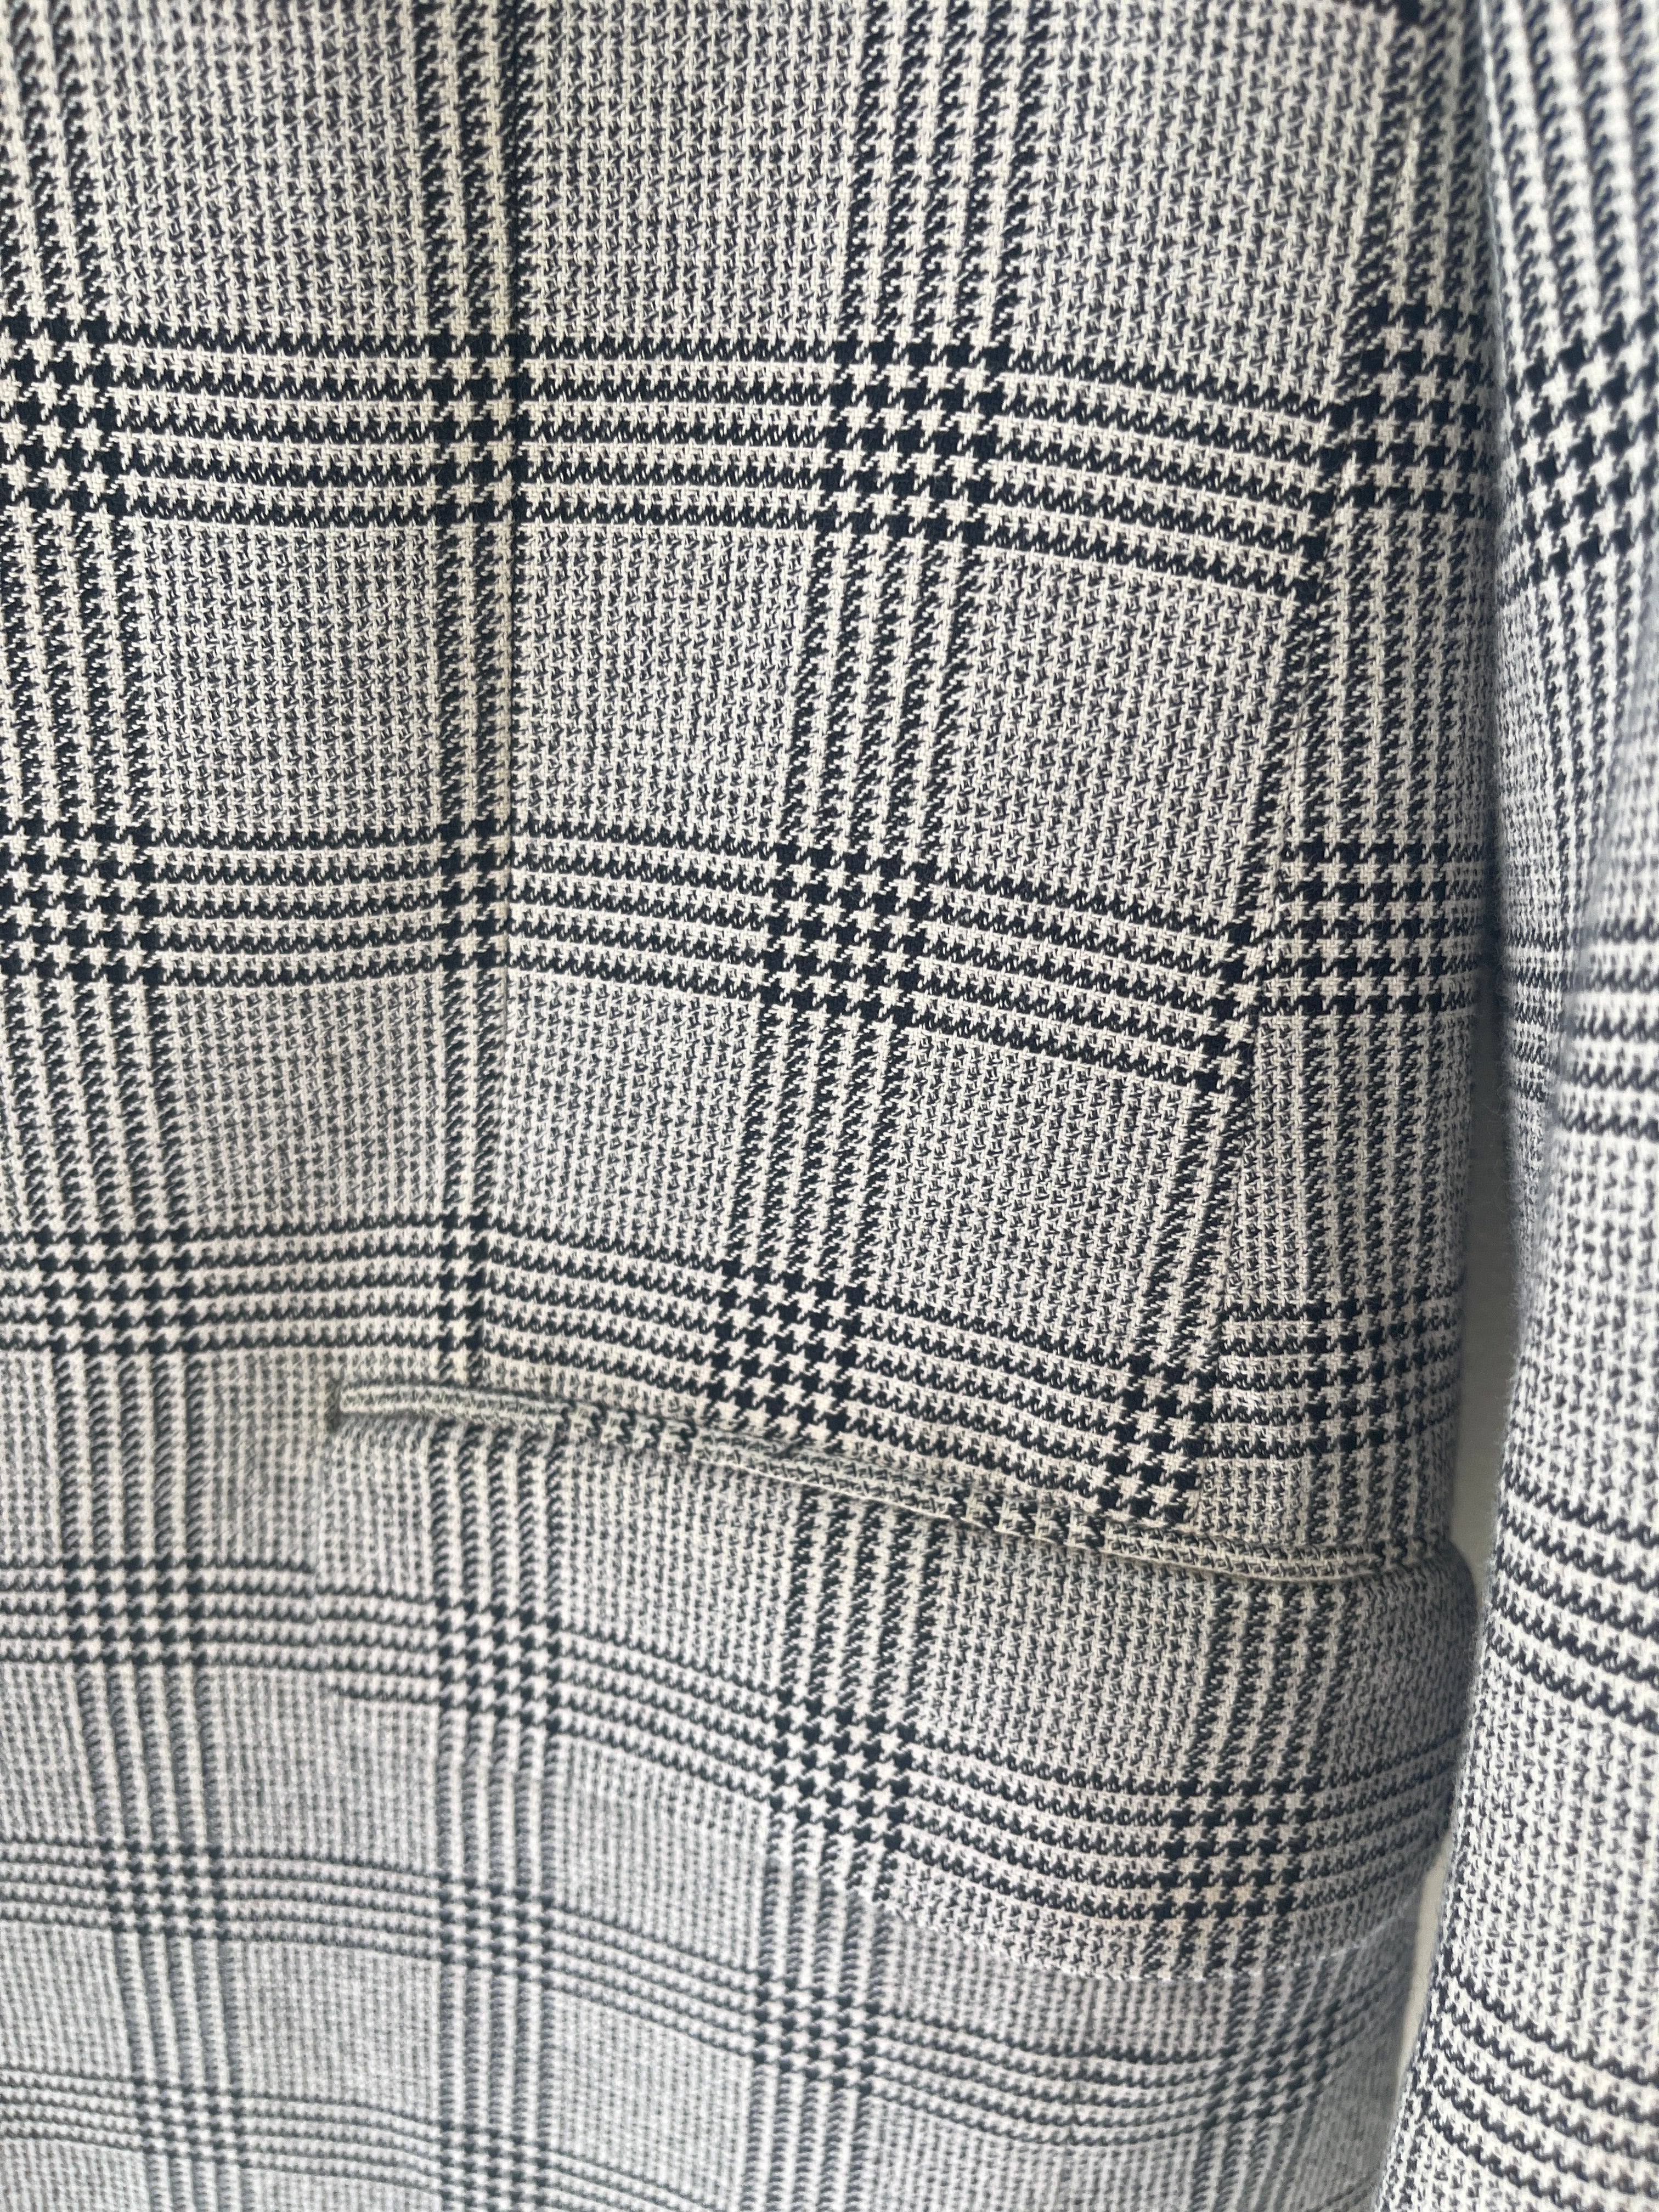 Checked light grey blazer by Yves Saint Laurent.